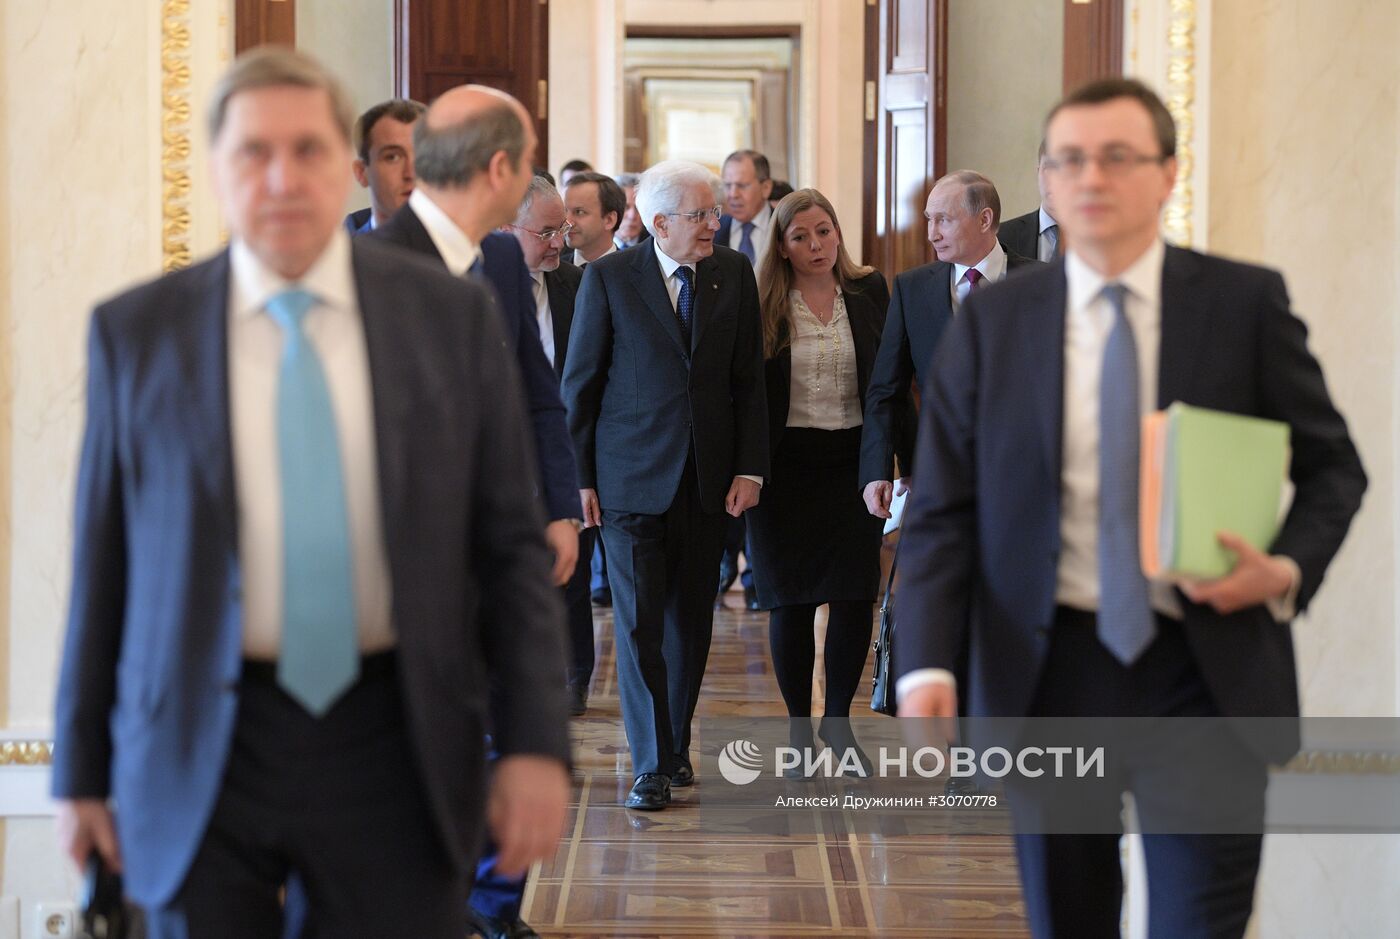 Рабочая встреча президента РФ В. Путина с президентом Италии С. Маттареллой